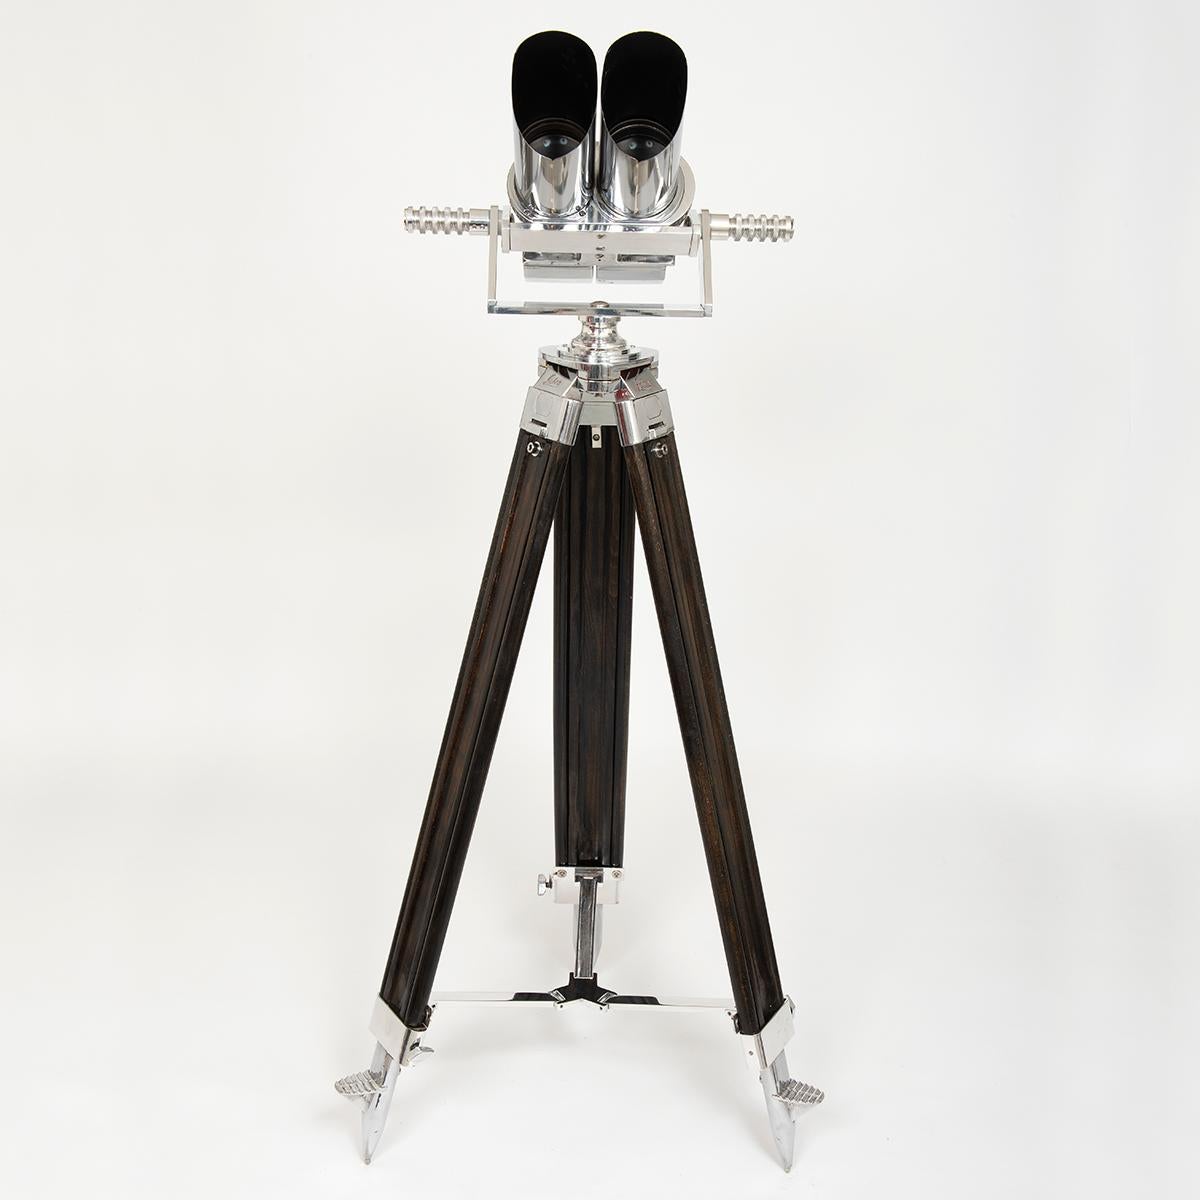 Desirable Jos Schneider & Co DKL Binoculars, Rare & Historical Object 4